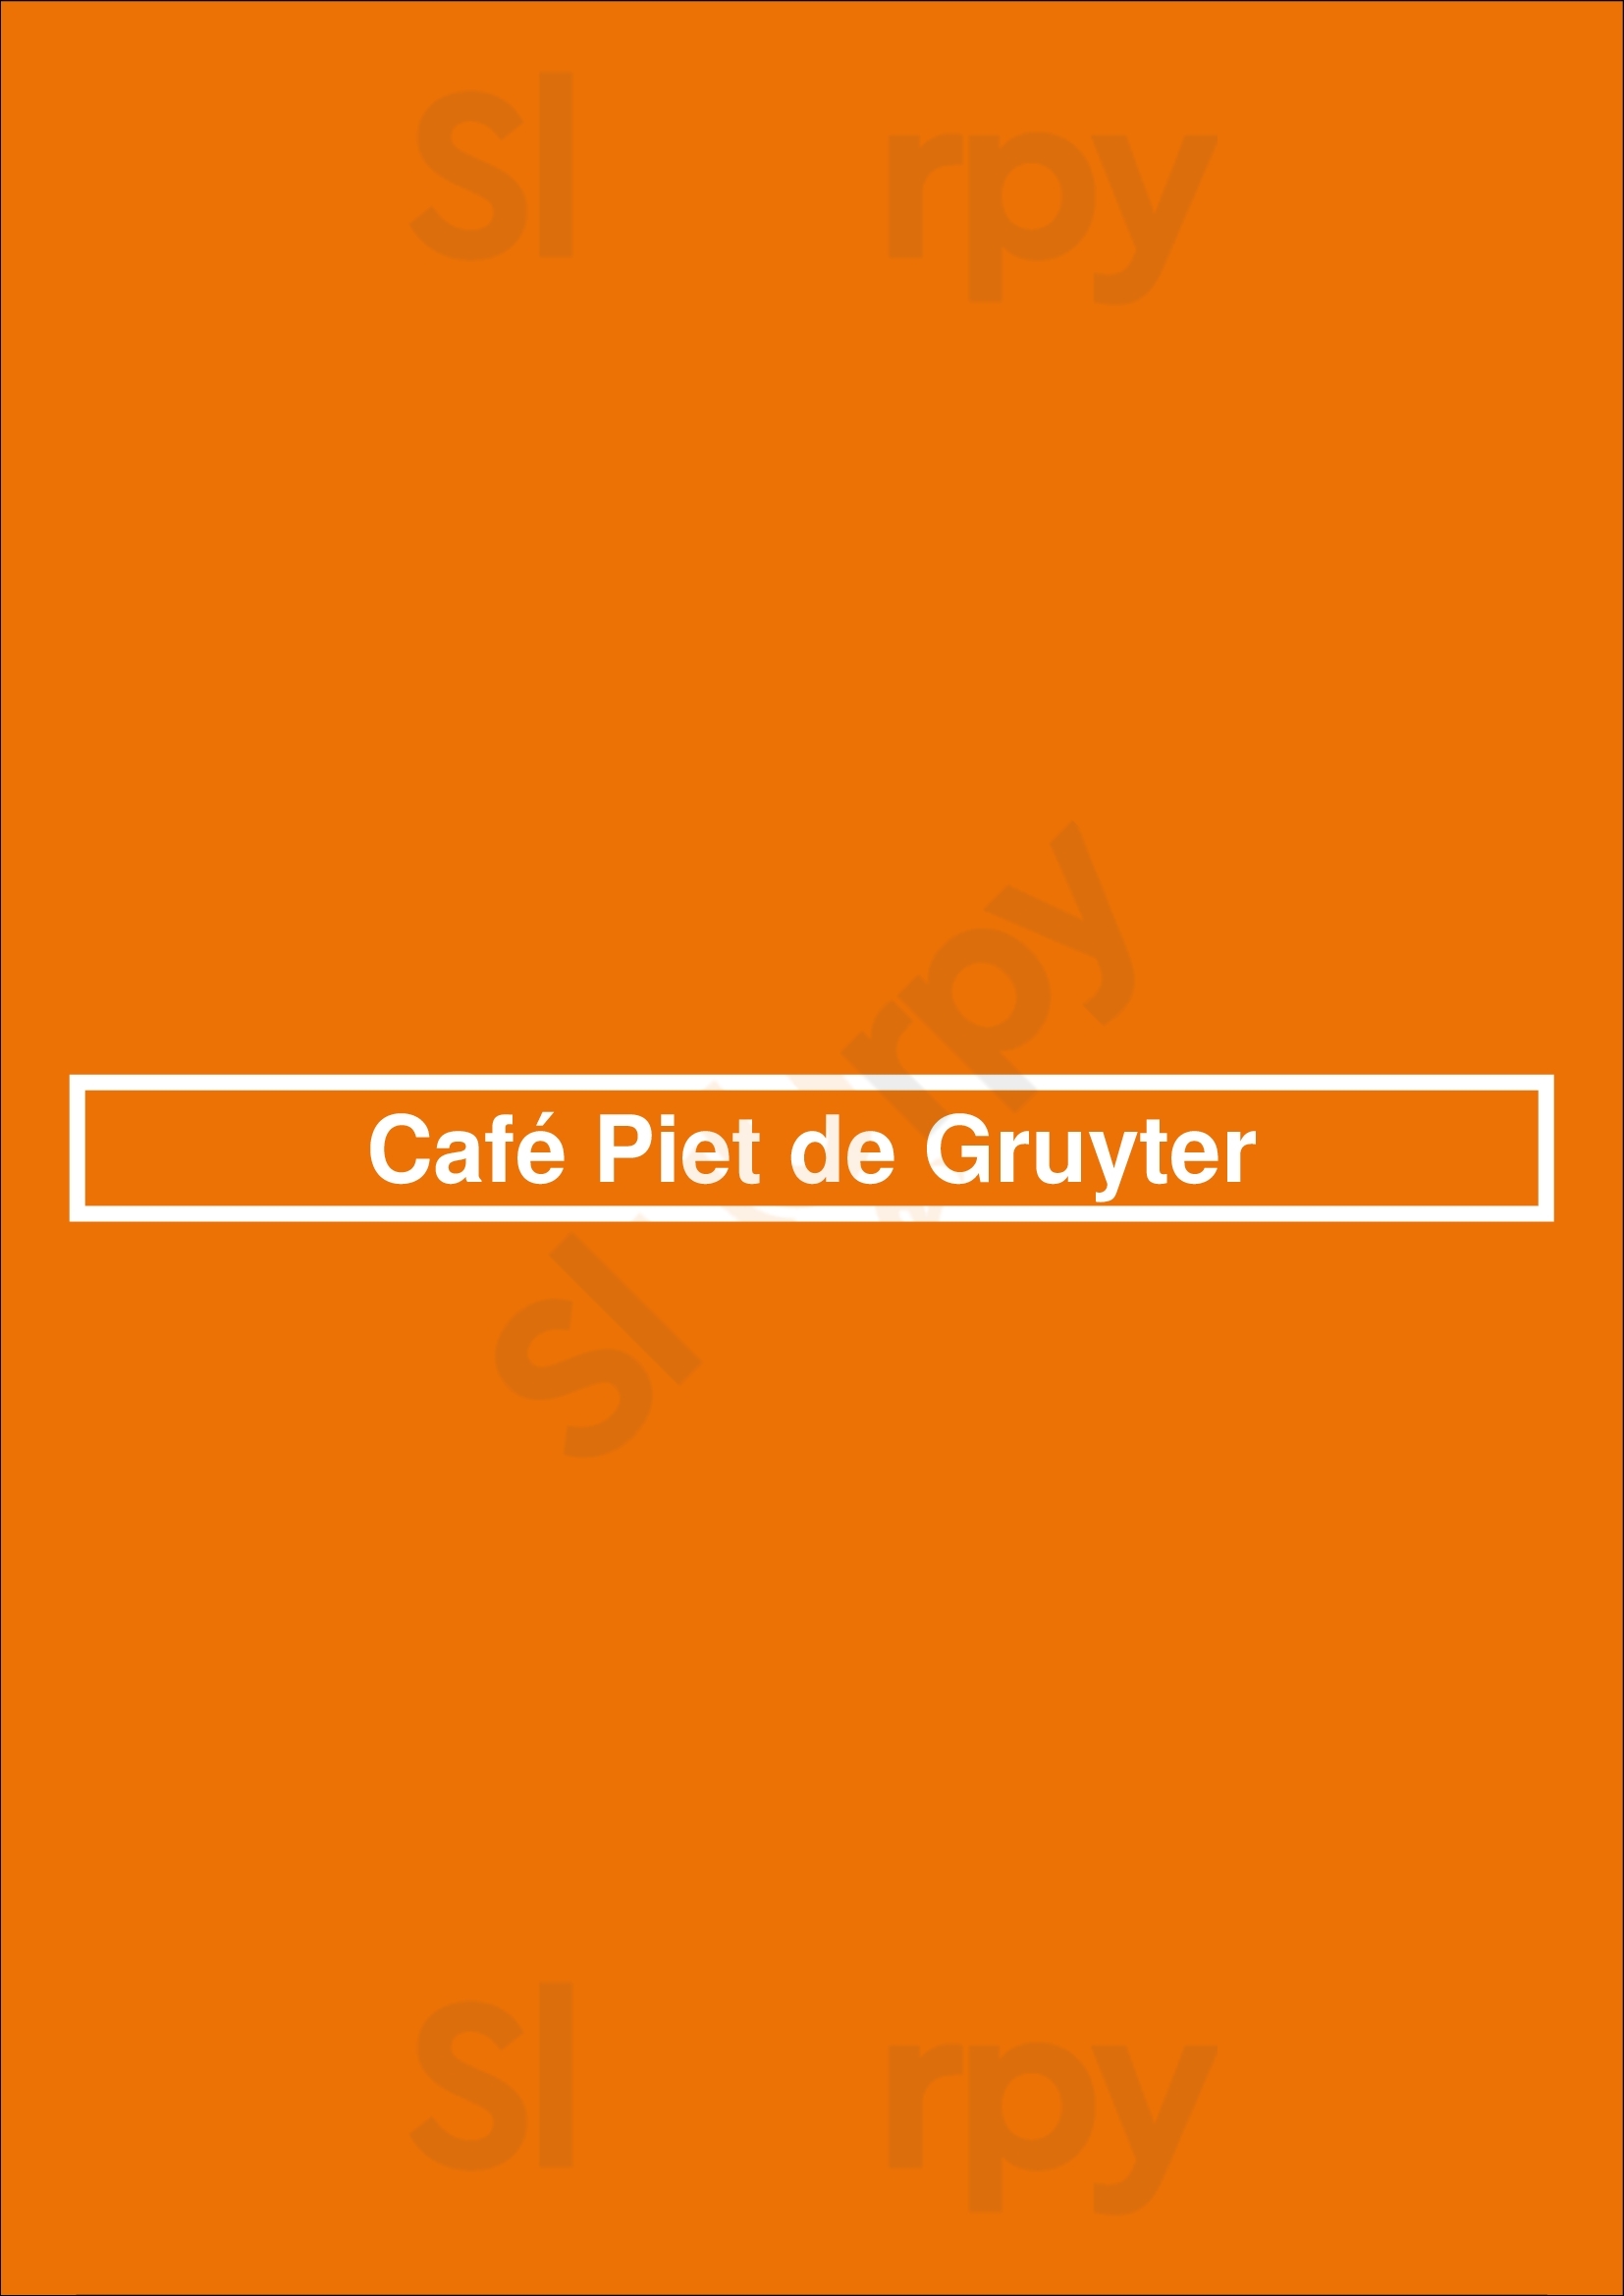 Café Piet De Gruyter Amsterdam Menu - 1